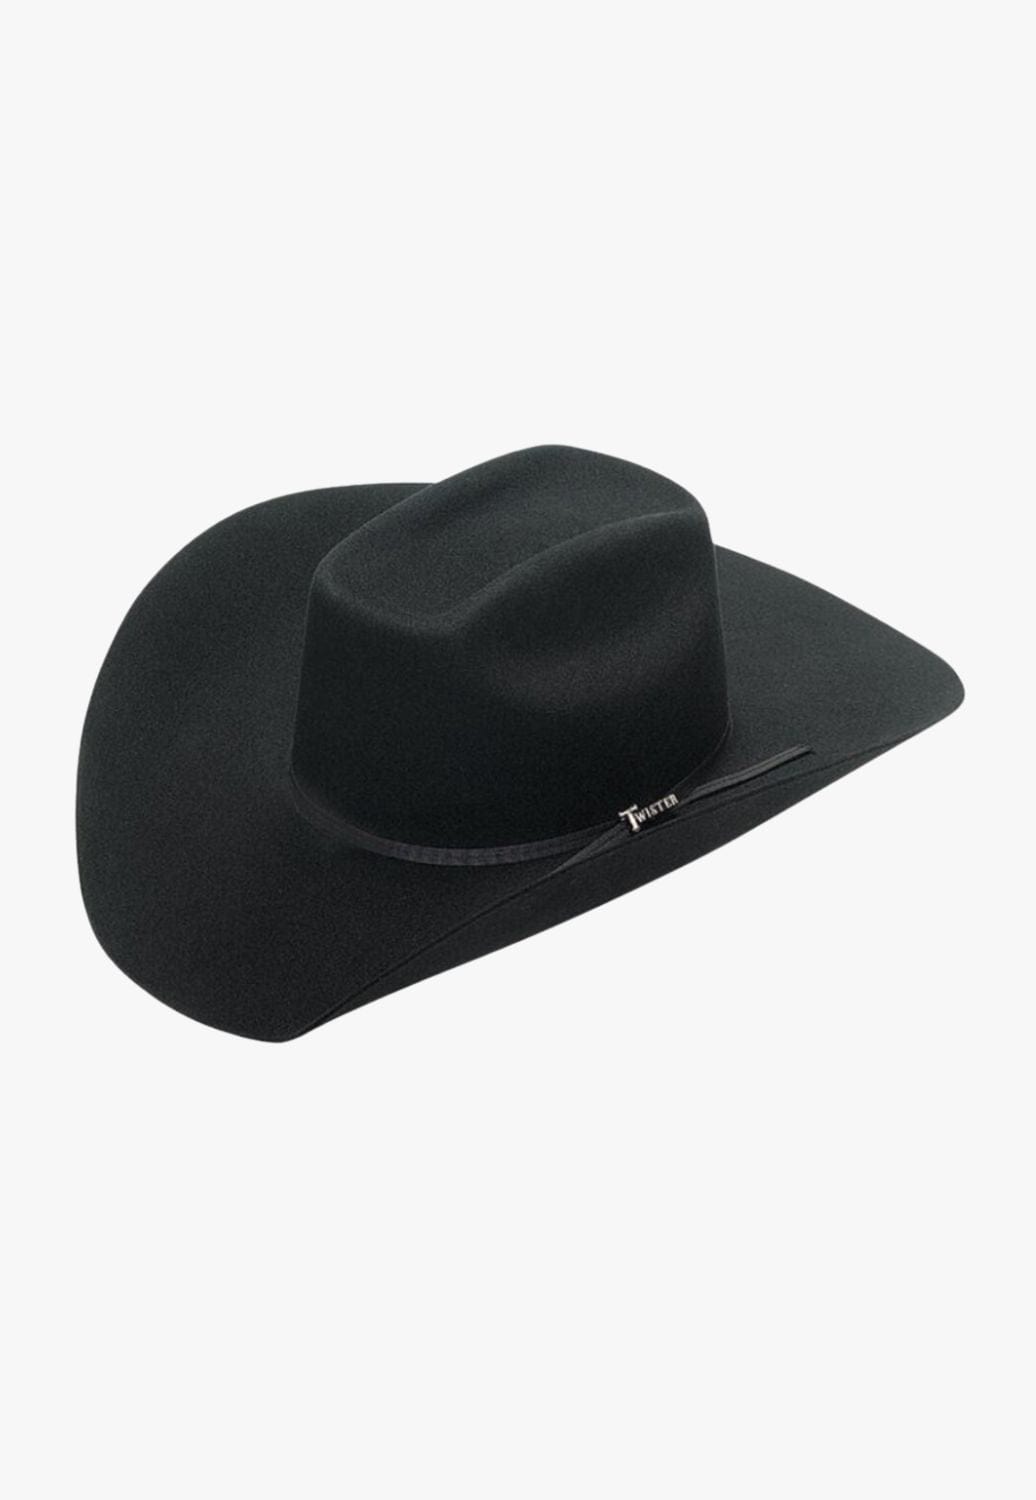 Twister HATS - Felt Twister Colton Wool Hat